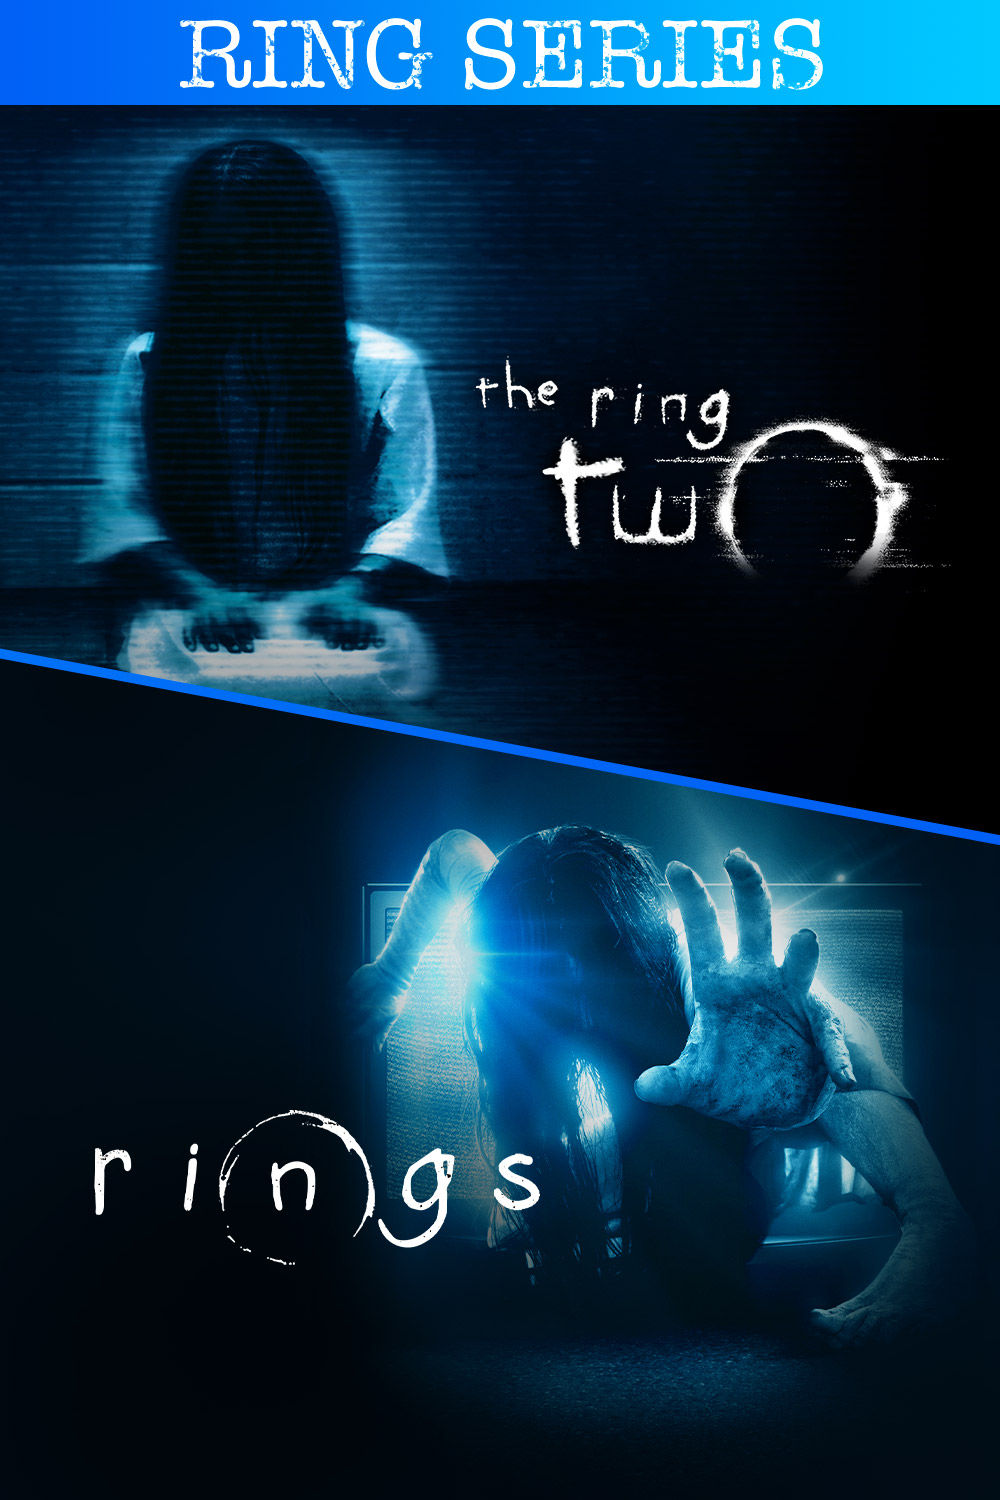 Watch Ring Series Online